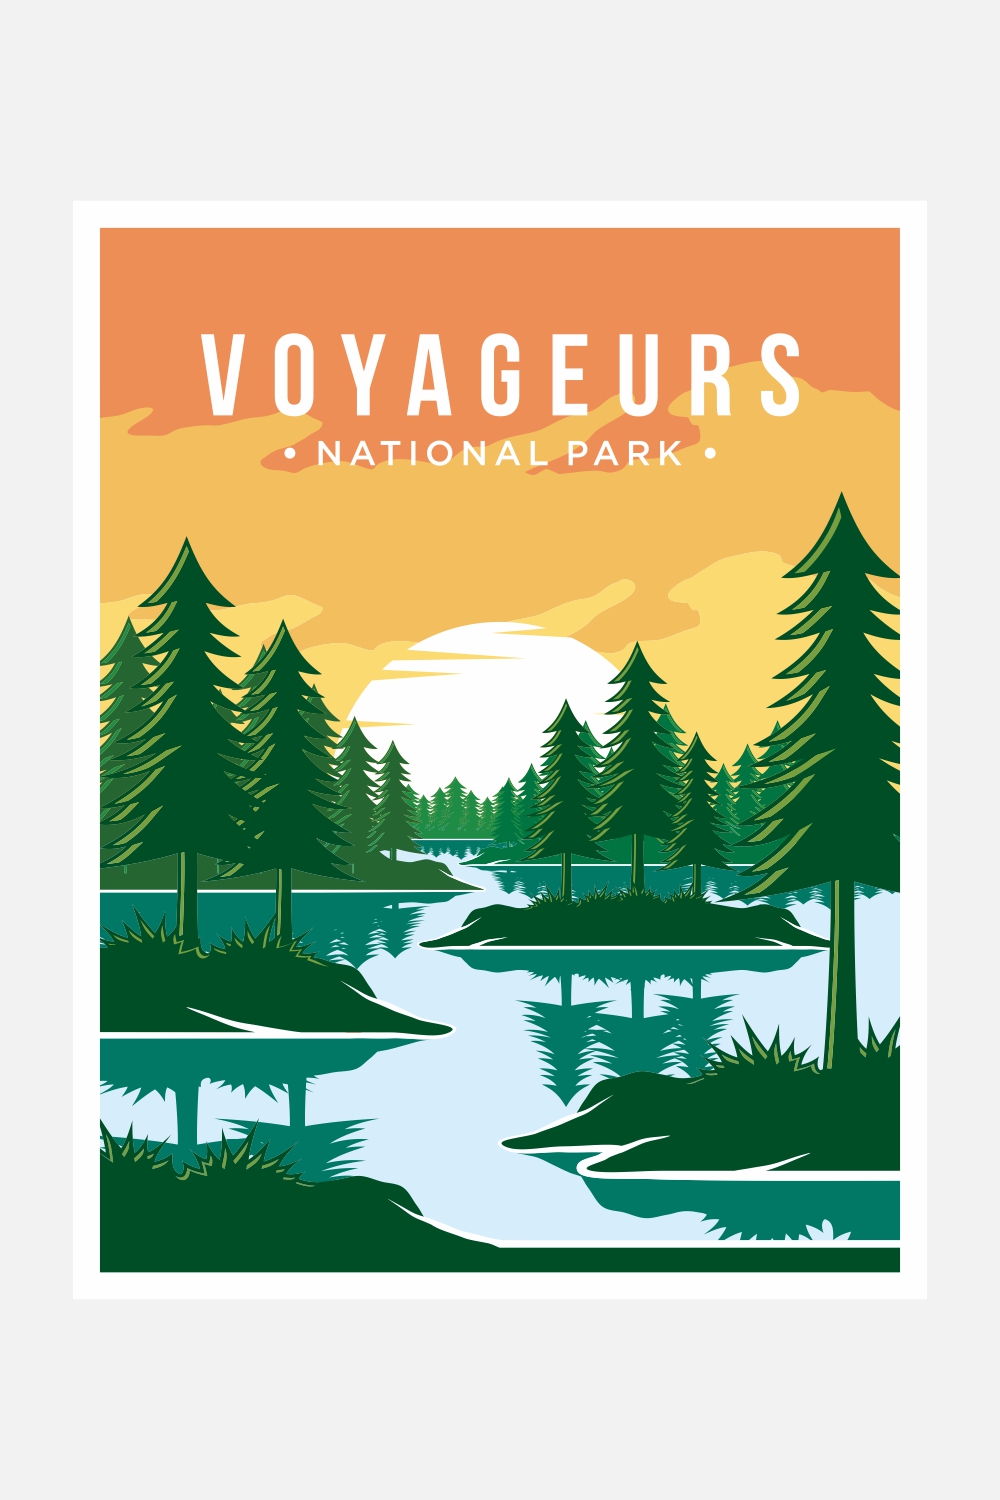 Voyageurs National Park poster vector illustration design – Only $8 pinterest preview image.